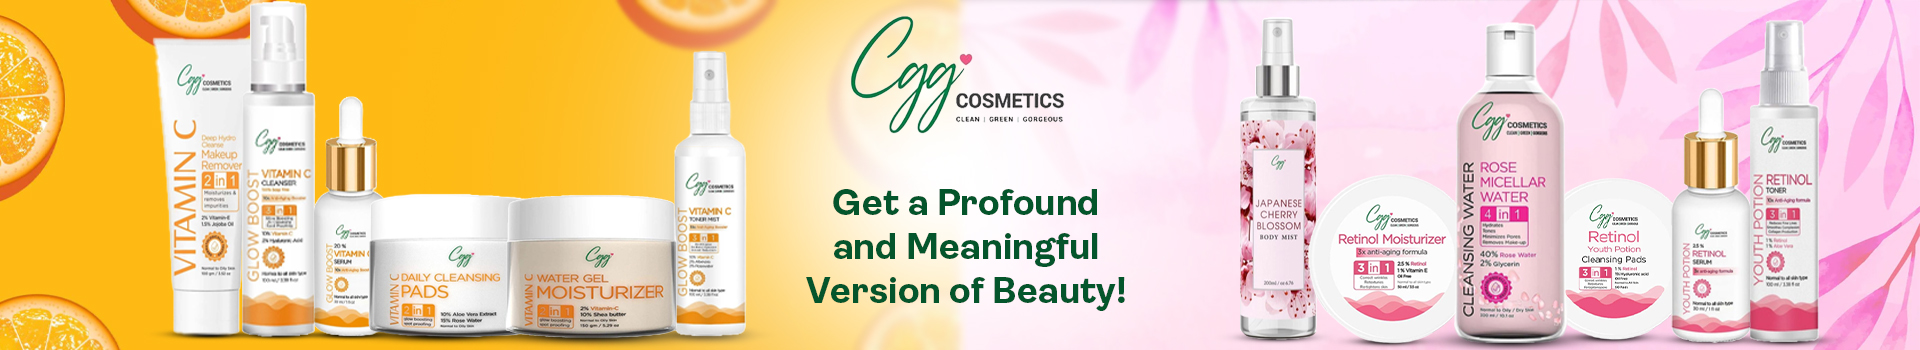 CGG Cosmetics